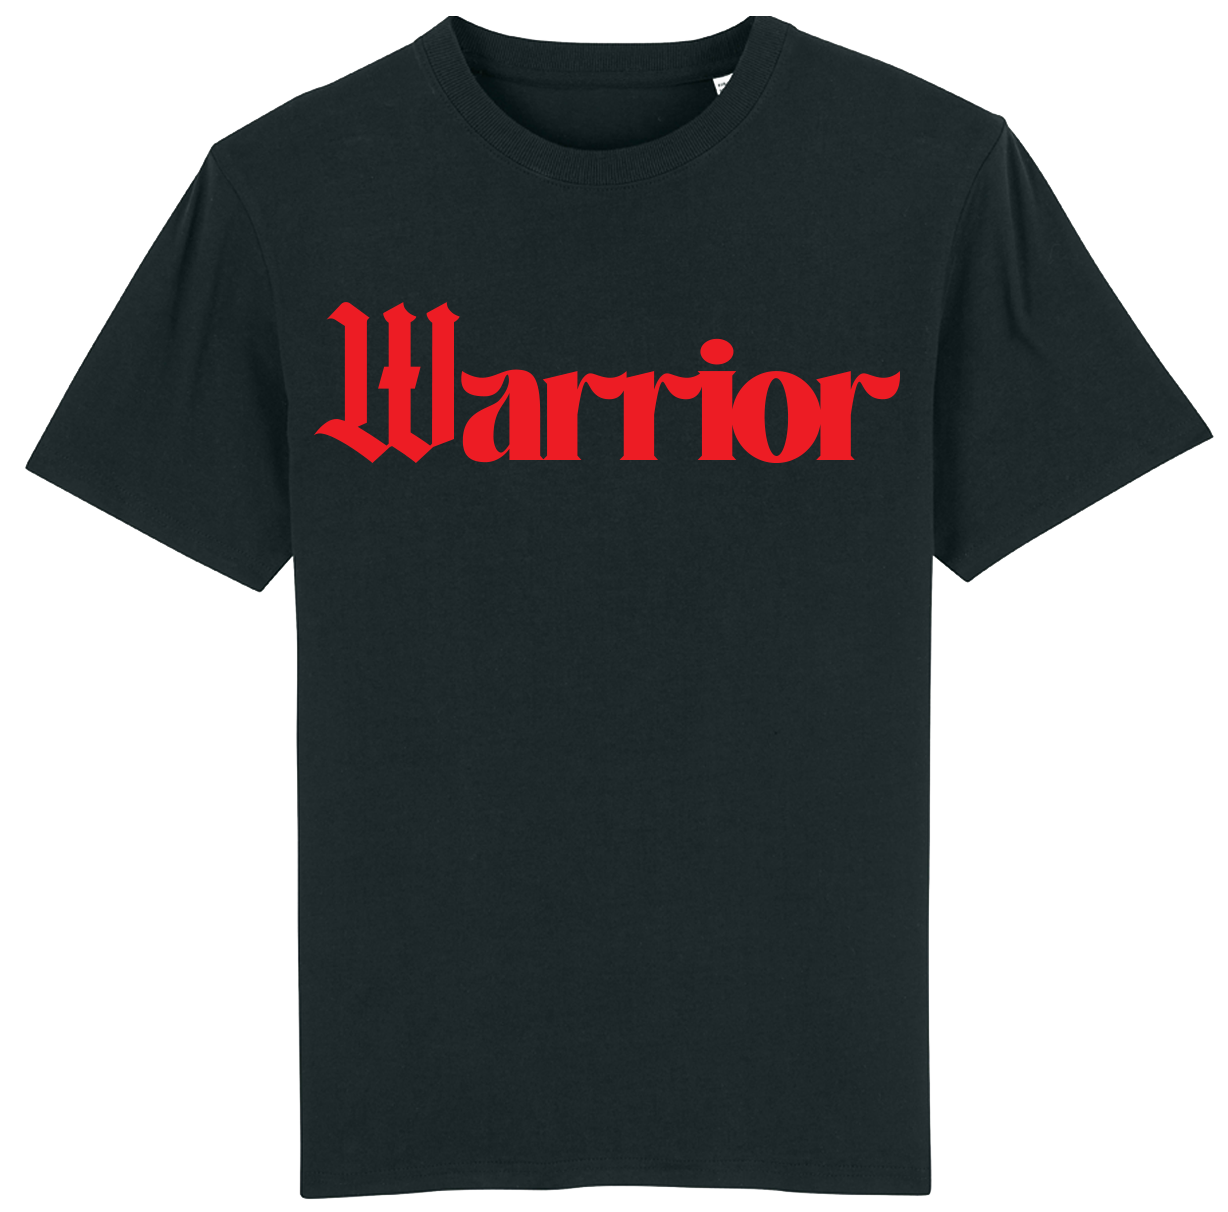 OATW Warrior black T-shirt (Pre-order)